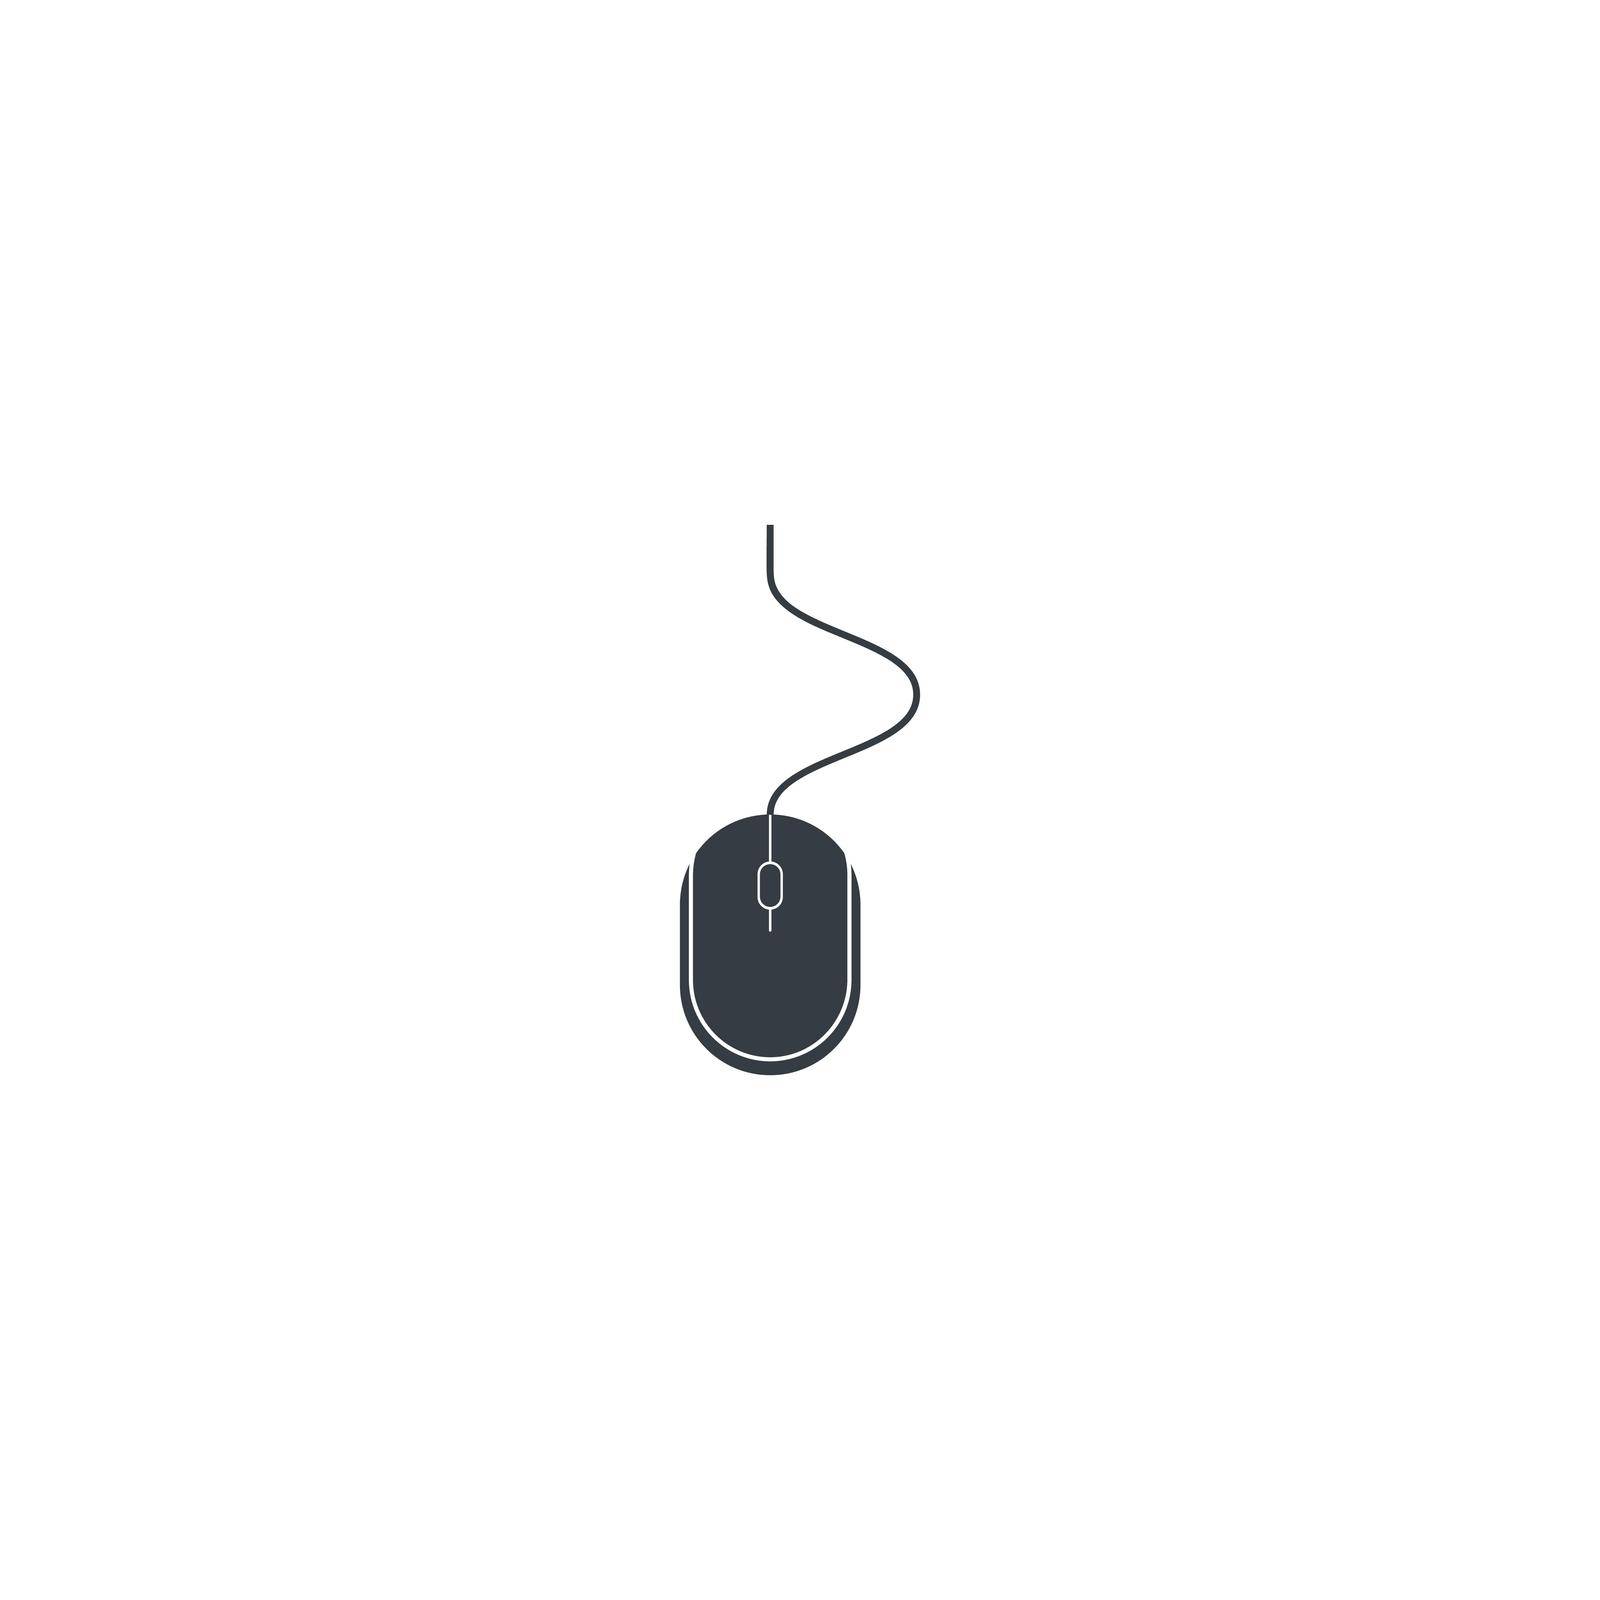 Computer mouse icon vector template design